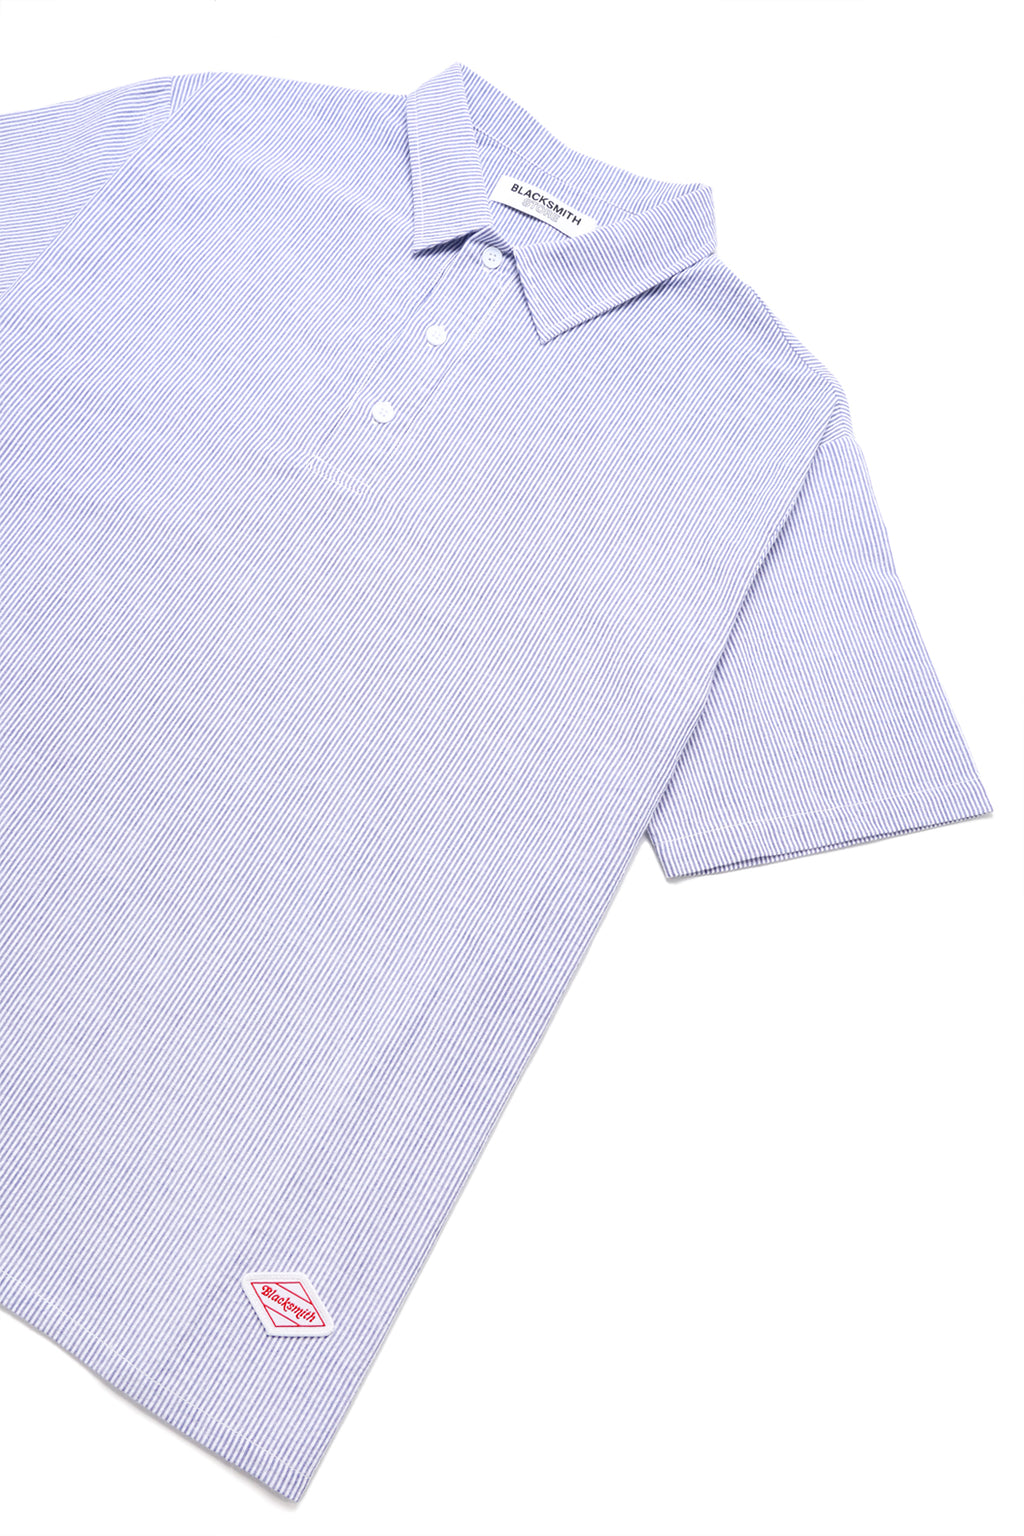 Blacksmith - Short Sleeved Popover Shirt - Blue Seersucker